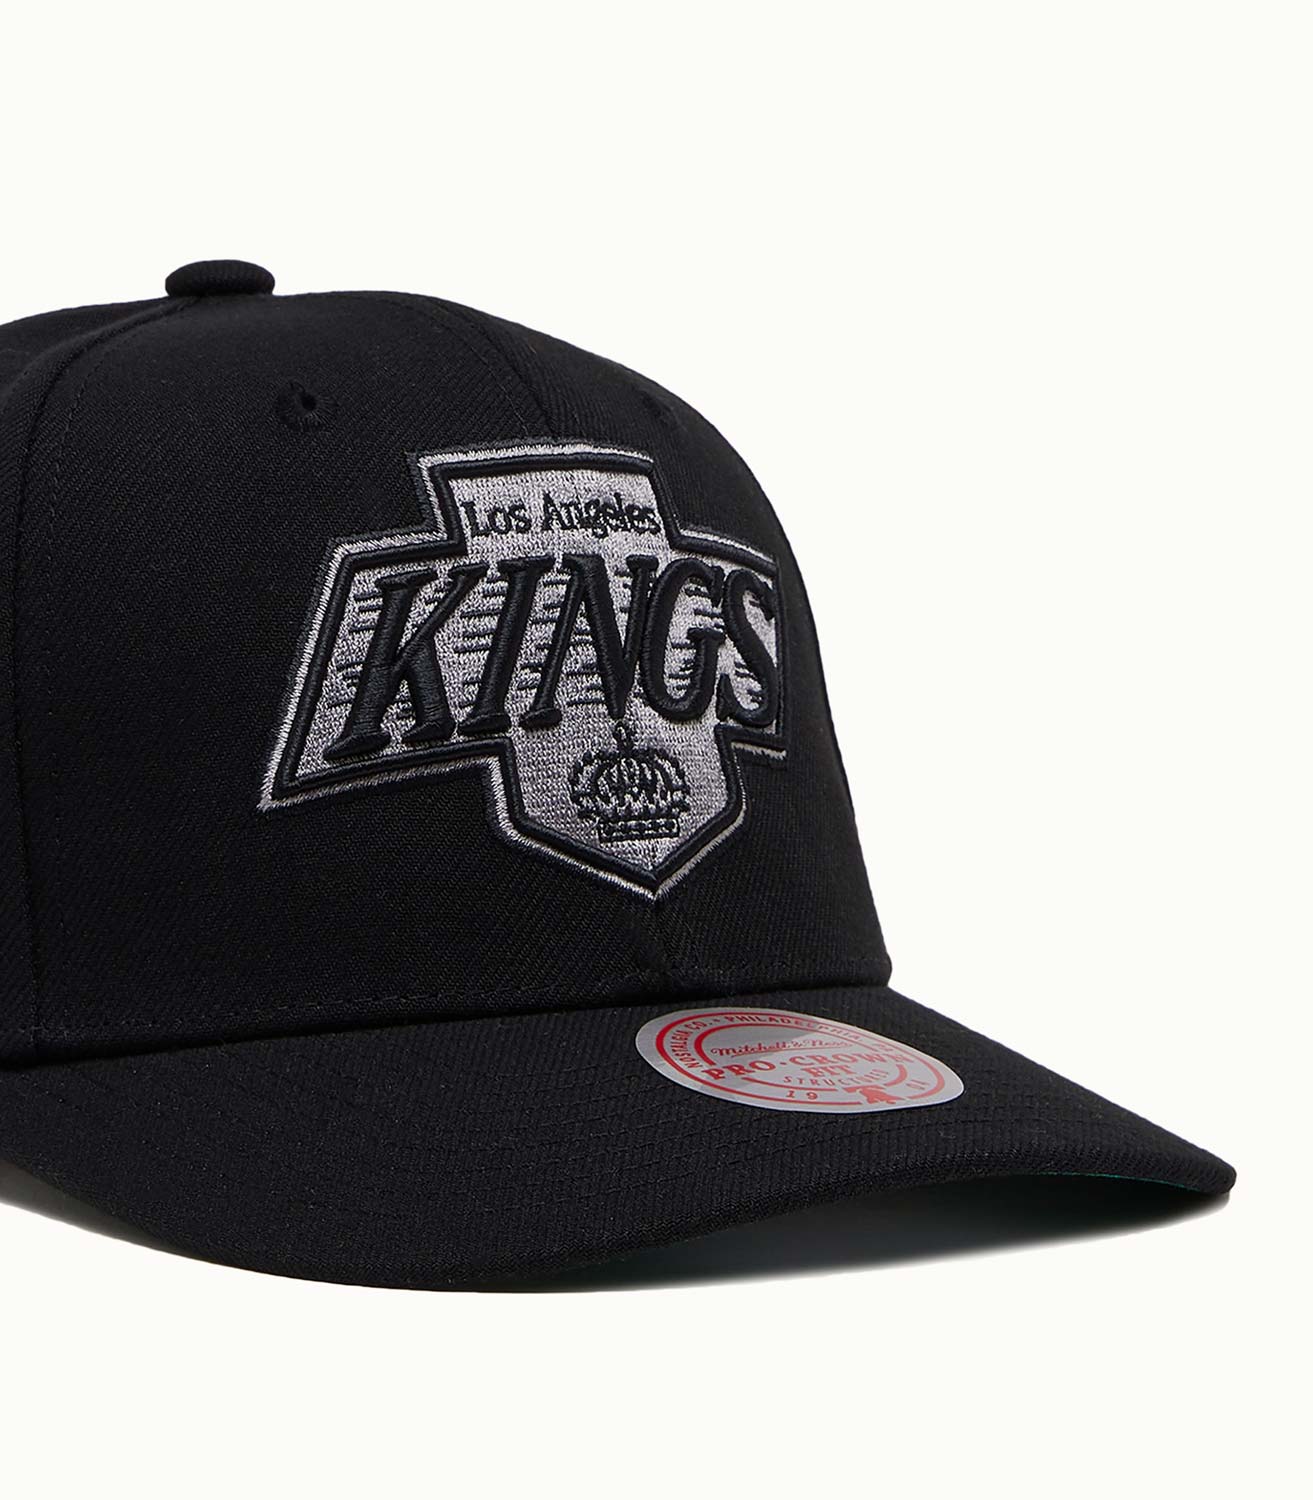 MITCHELL & NESS LOS ANGELES KINGS BASEBALL CAP